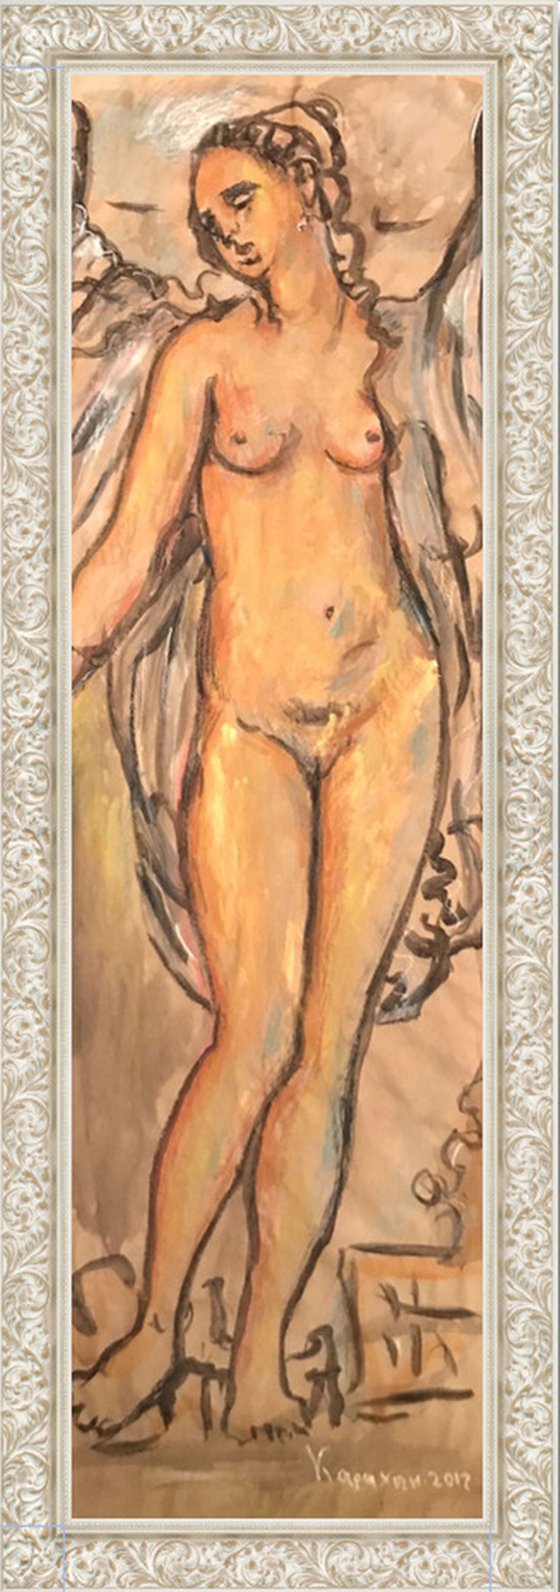 ANGEL - Graphics drawing, nude art, original painting drawing angel wings love gold beautiful female Paris - Christmas gift